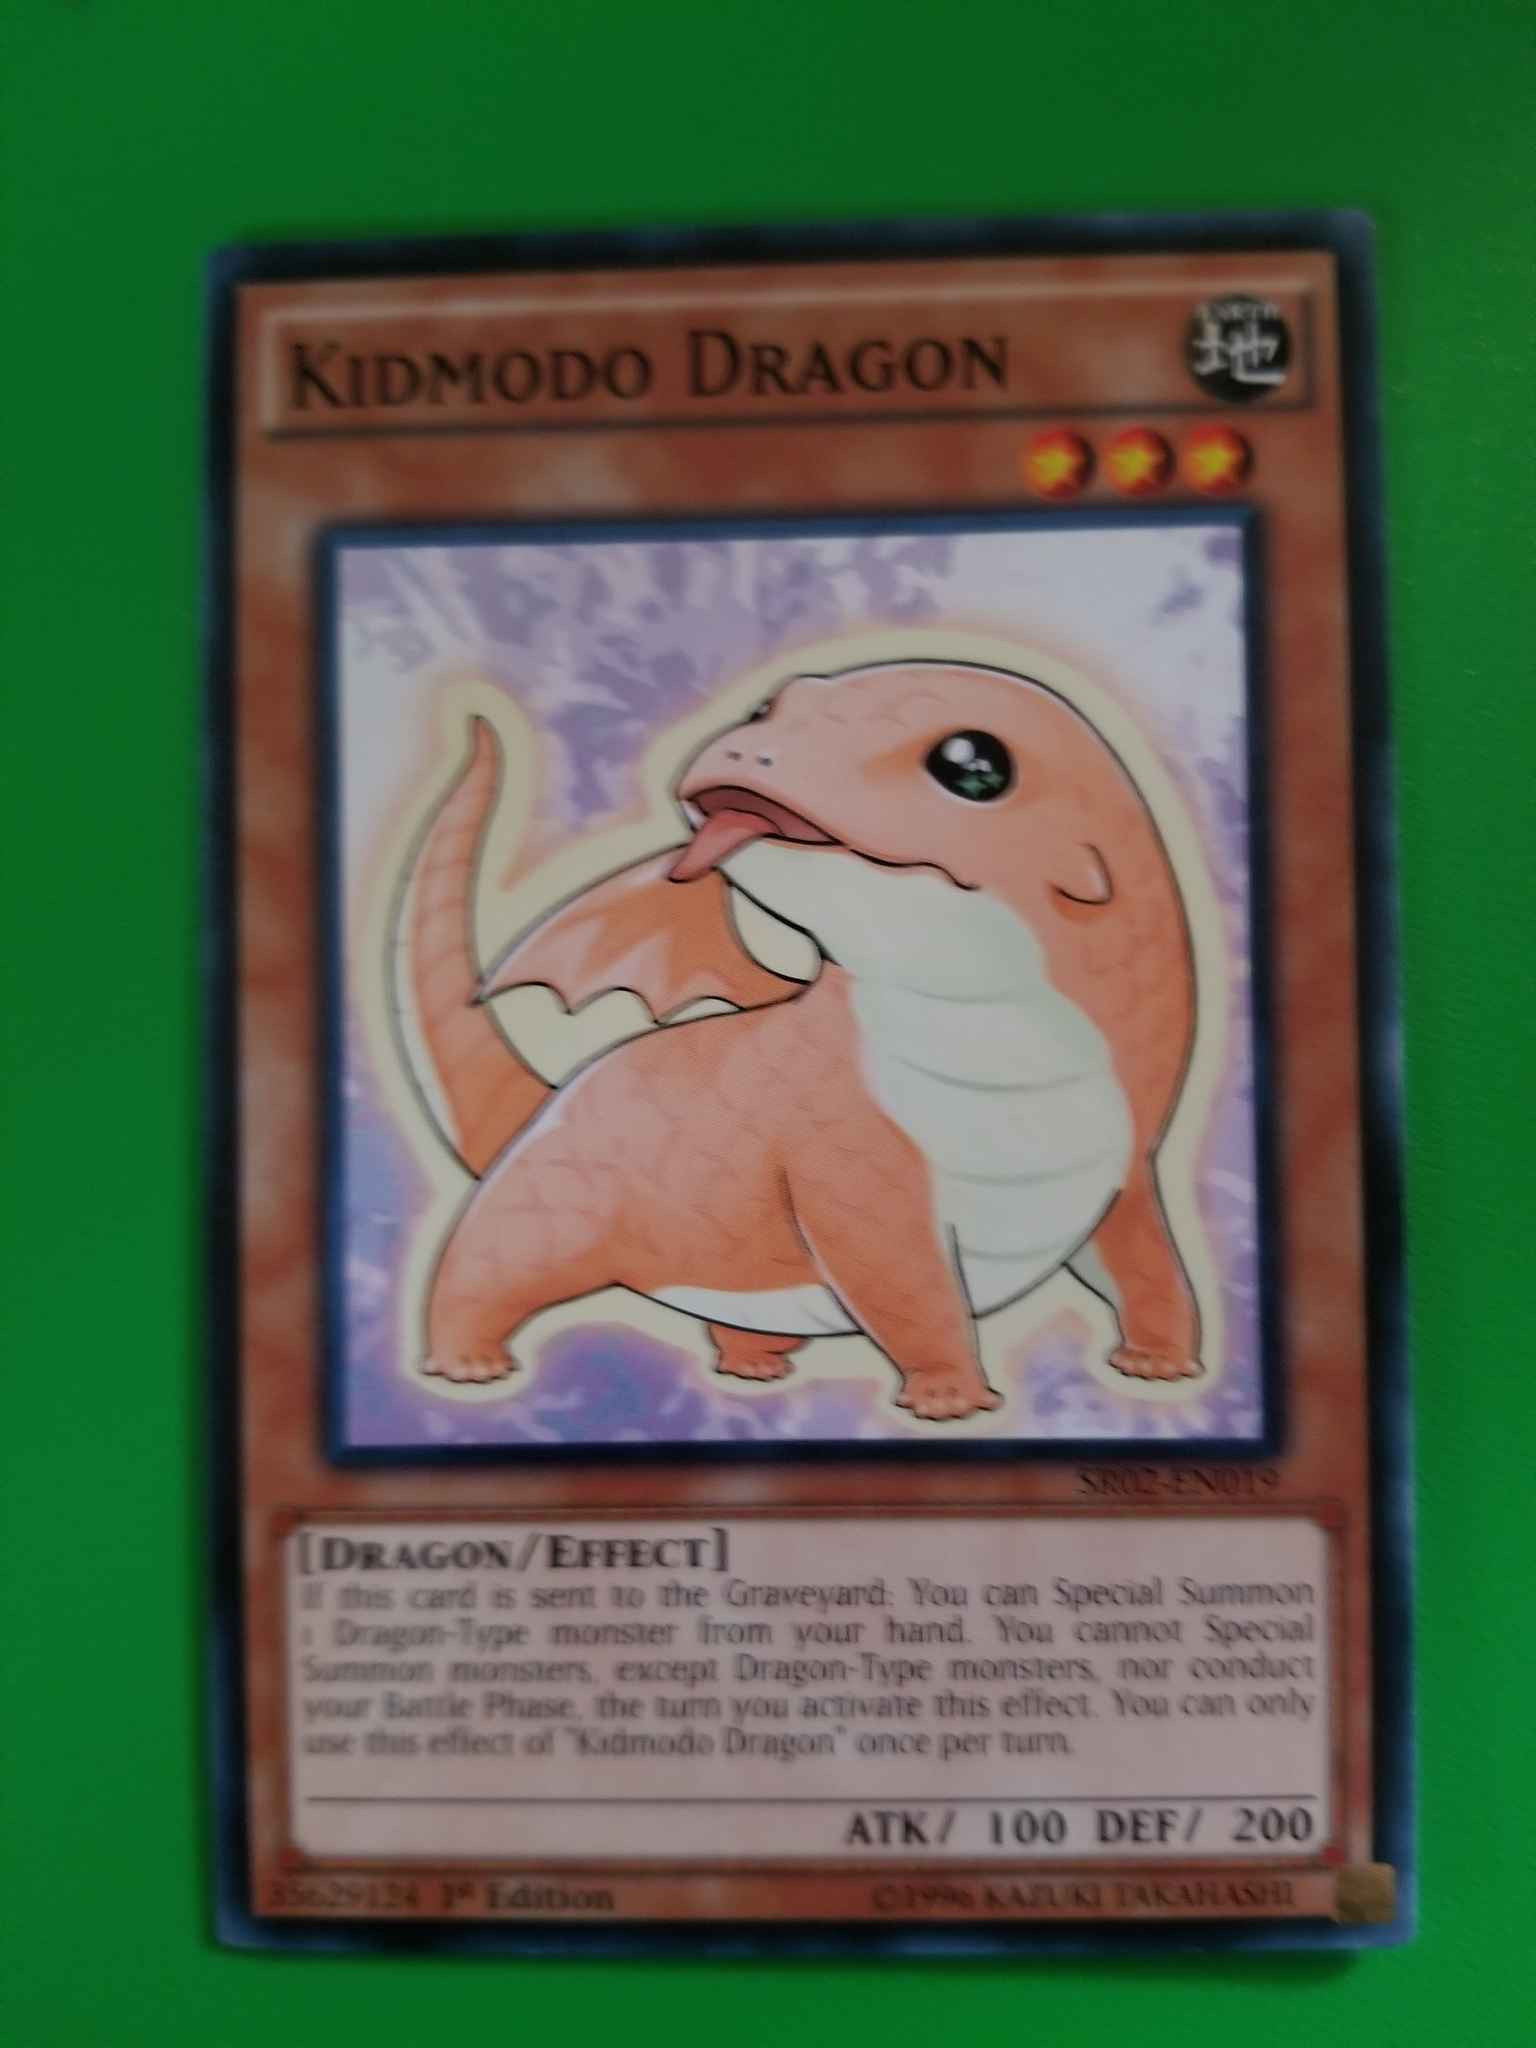 Kidmodo Dragon Common 1st Edition Yugioh Card SR02-EN019